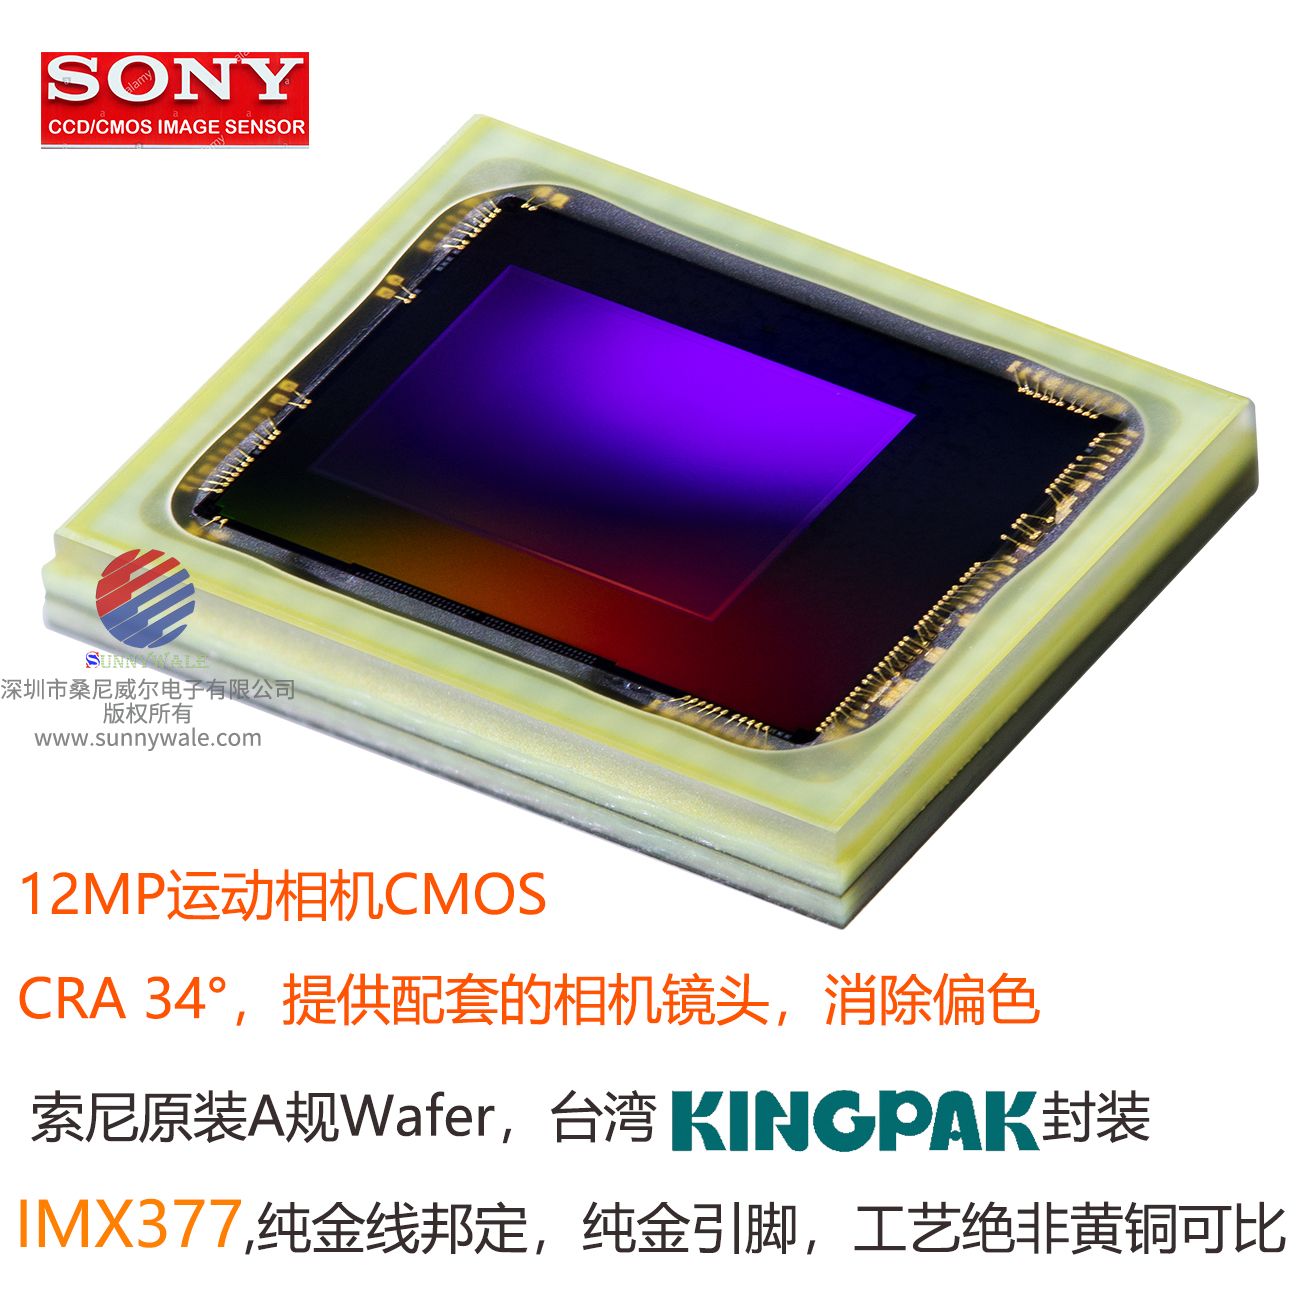 IMX377,12MP CMOS SENSOR，台湾KINGPAK封装IMX377，进光角度CRA 34° sensor配套镜头，1/2.3" CMOS Image Sensor，for sport action camera sensor，索尼高速高清sensor , SONY运动相机图像传感器